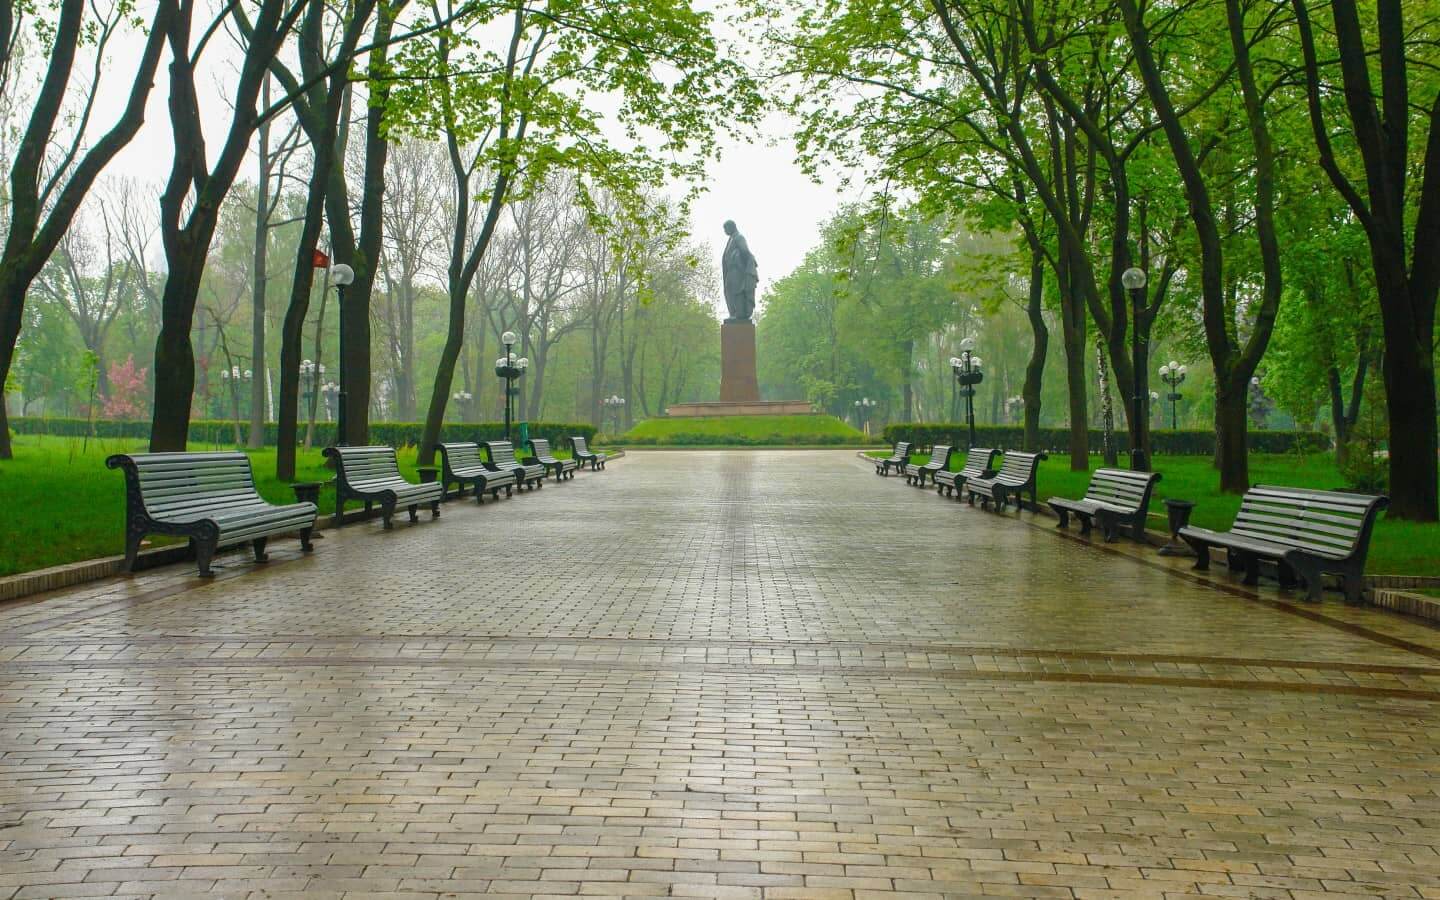 The Shevchenko Park